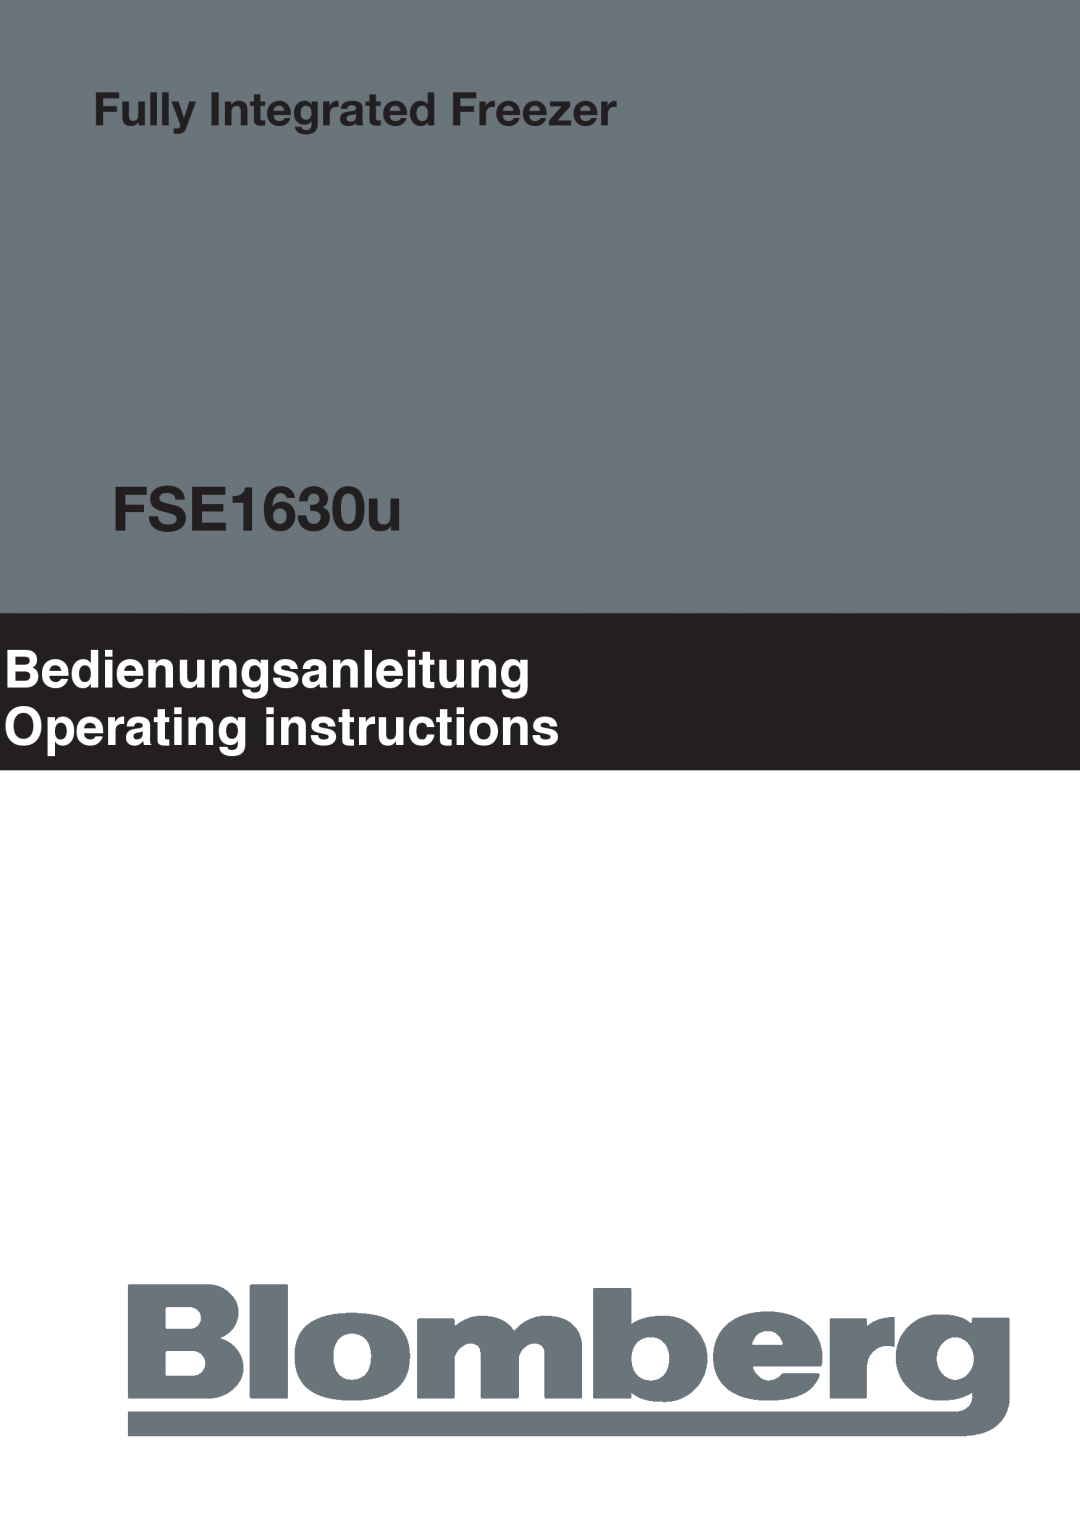 Blomberg FSE1630u manual Bedienungsanleitung Operating instructions, Fully Integrated Freezer 